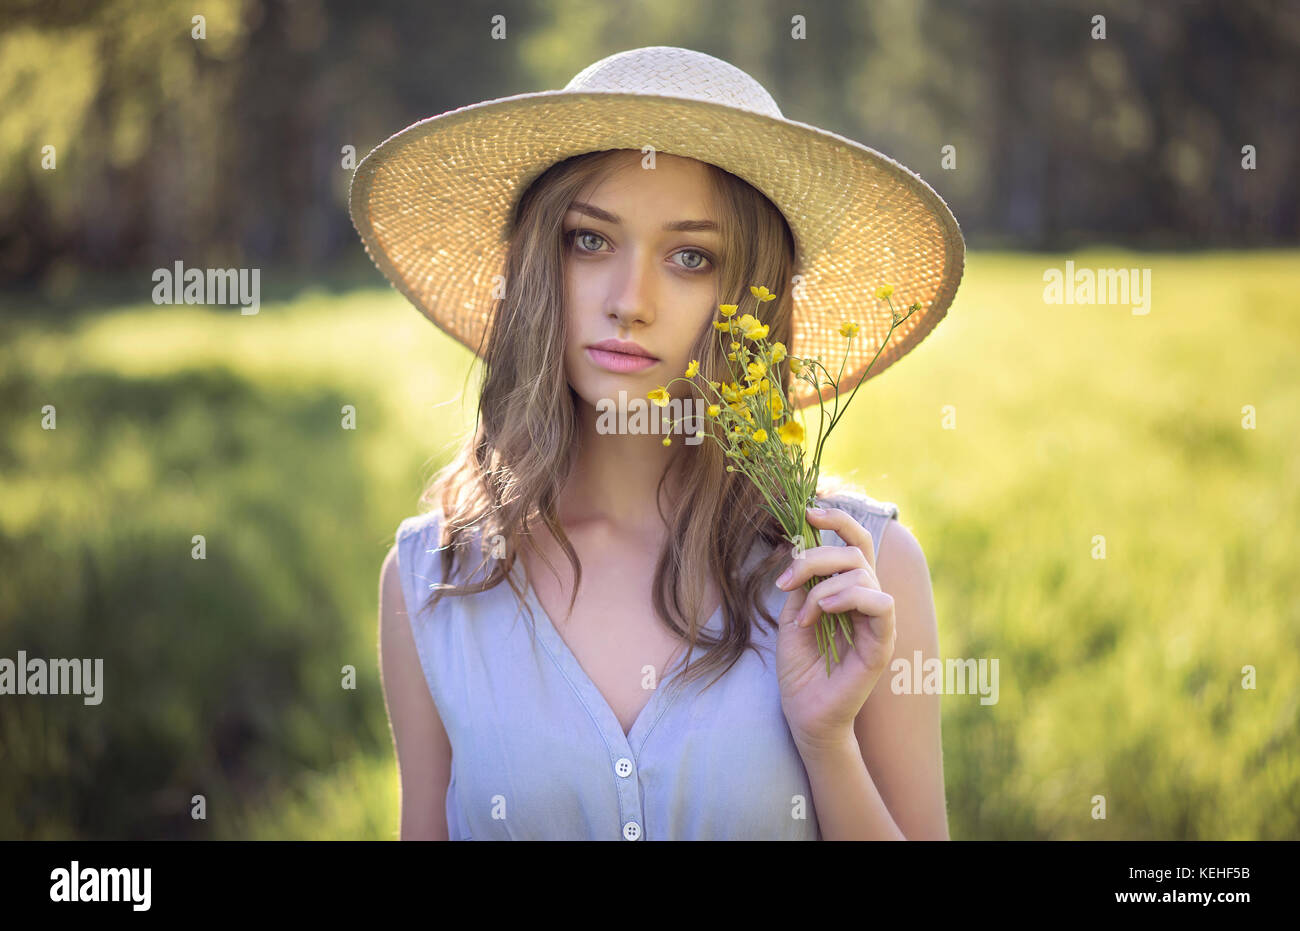 Caucasian woman wearing hat holding wildflowers Stock Photo